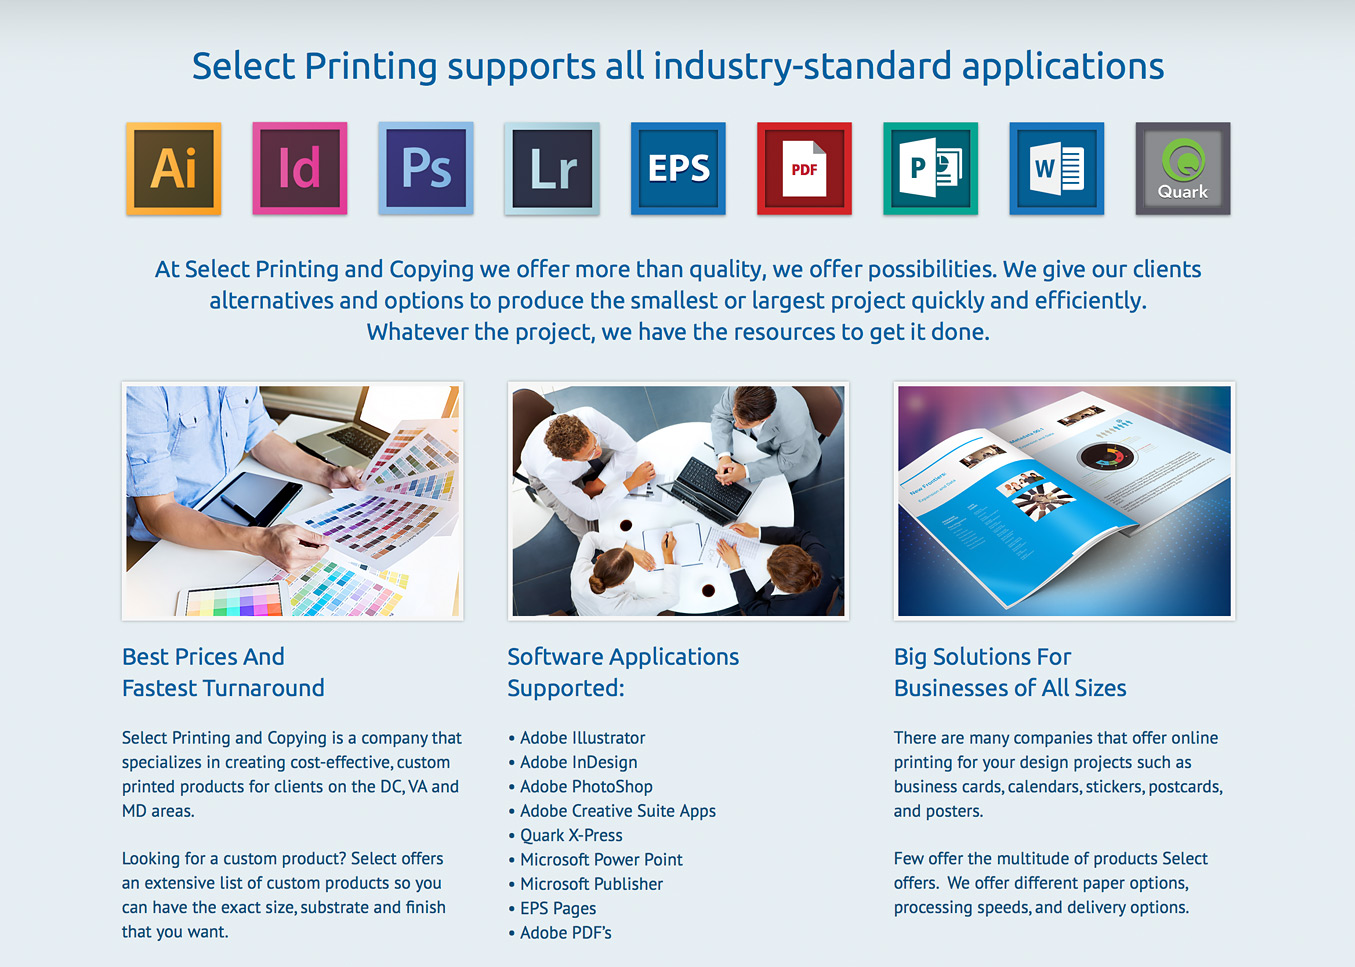 Select Printing and Copying